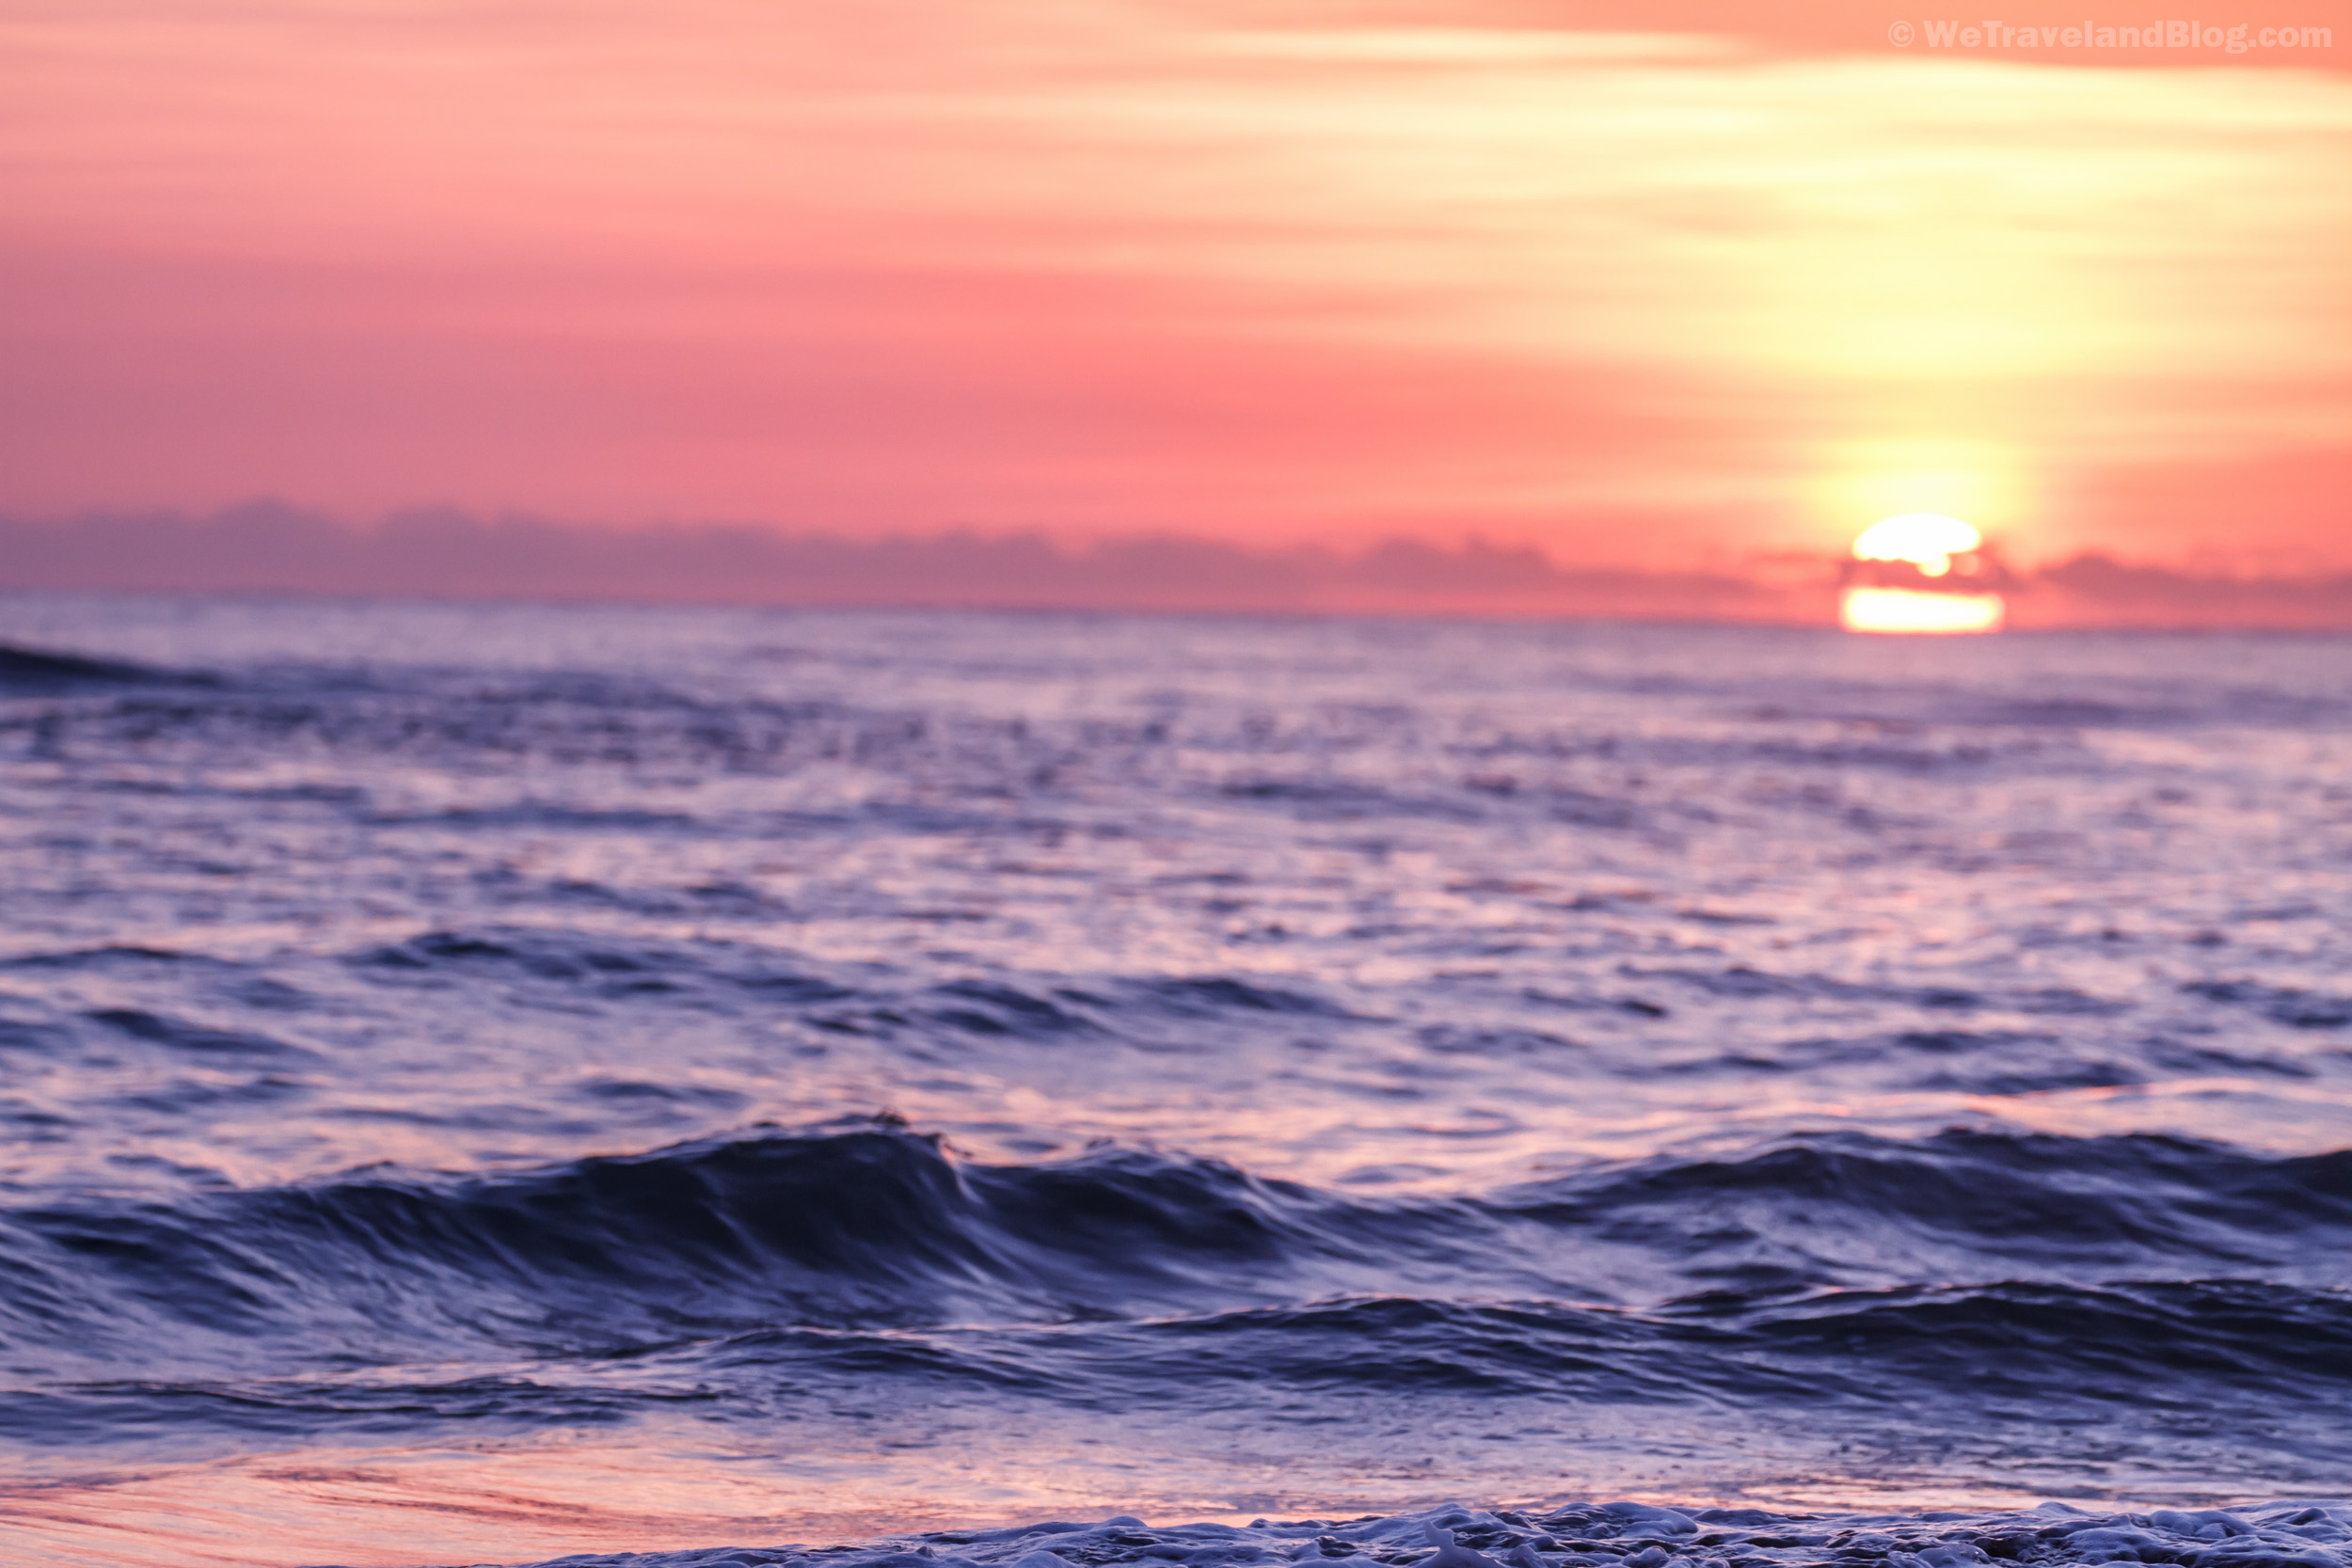 Wallpaper Wednesday Sunrise Over The Ocean Inspired Tranquility